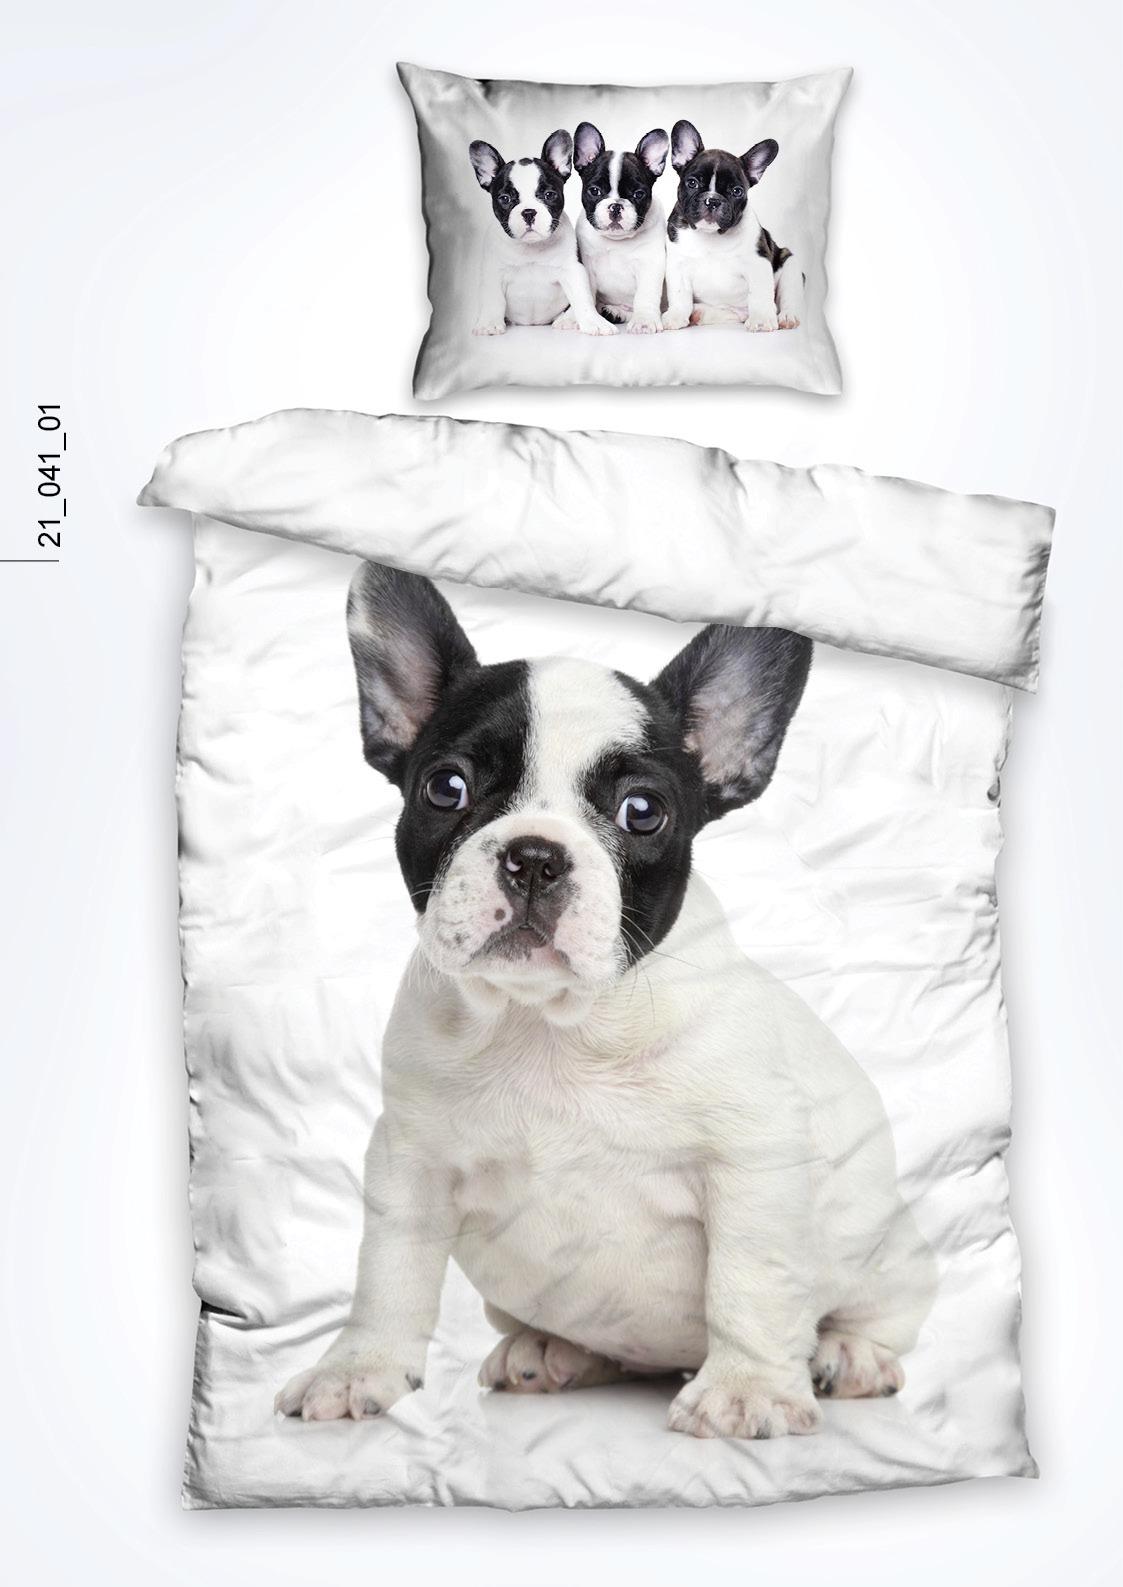 Povlečení French Bulldog, 140/200cm - bílá/černá, Design, textil (140/200cm)